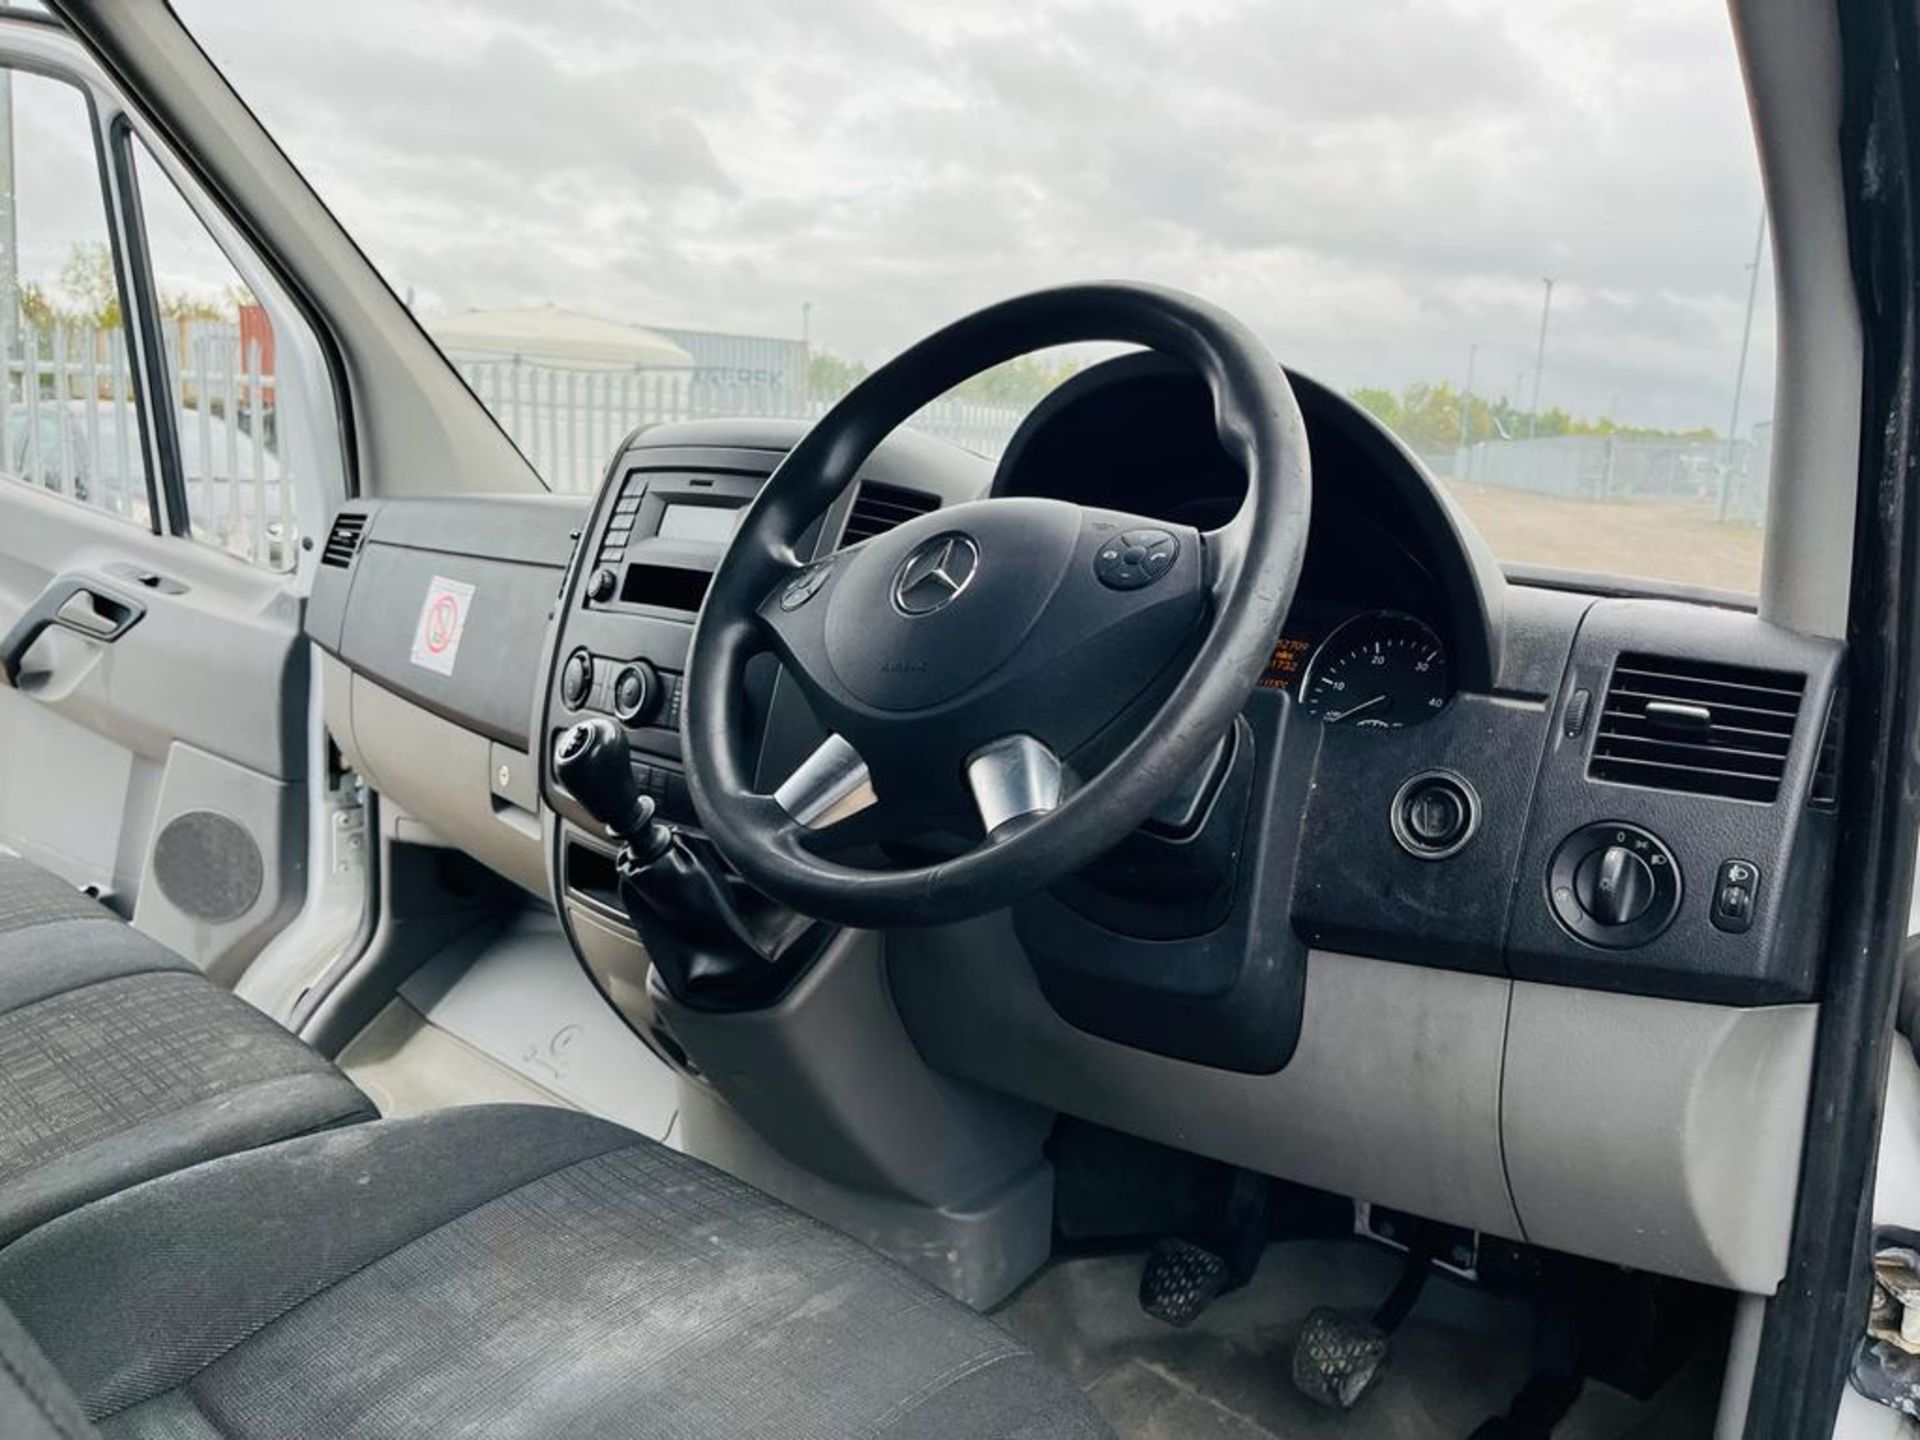 Mercedes-Benz Sprinter 313 2.1 CDI 3.5T LWB H/R 2014 '64 Reg' - Parking Sensors - Bluetooth Media - Image 17 of 27